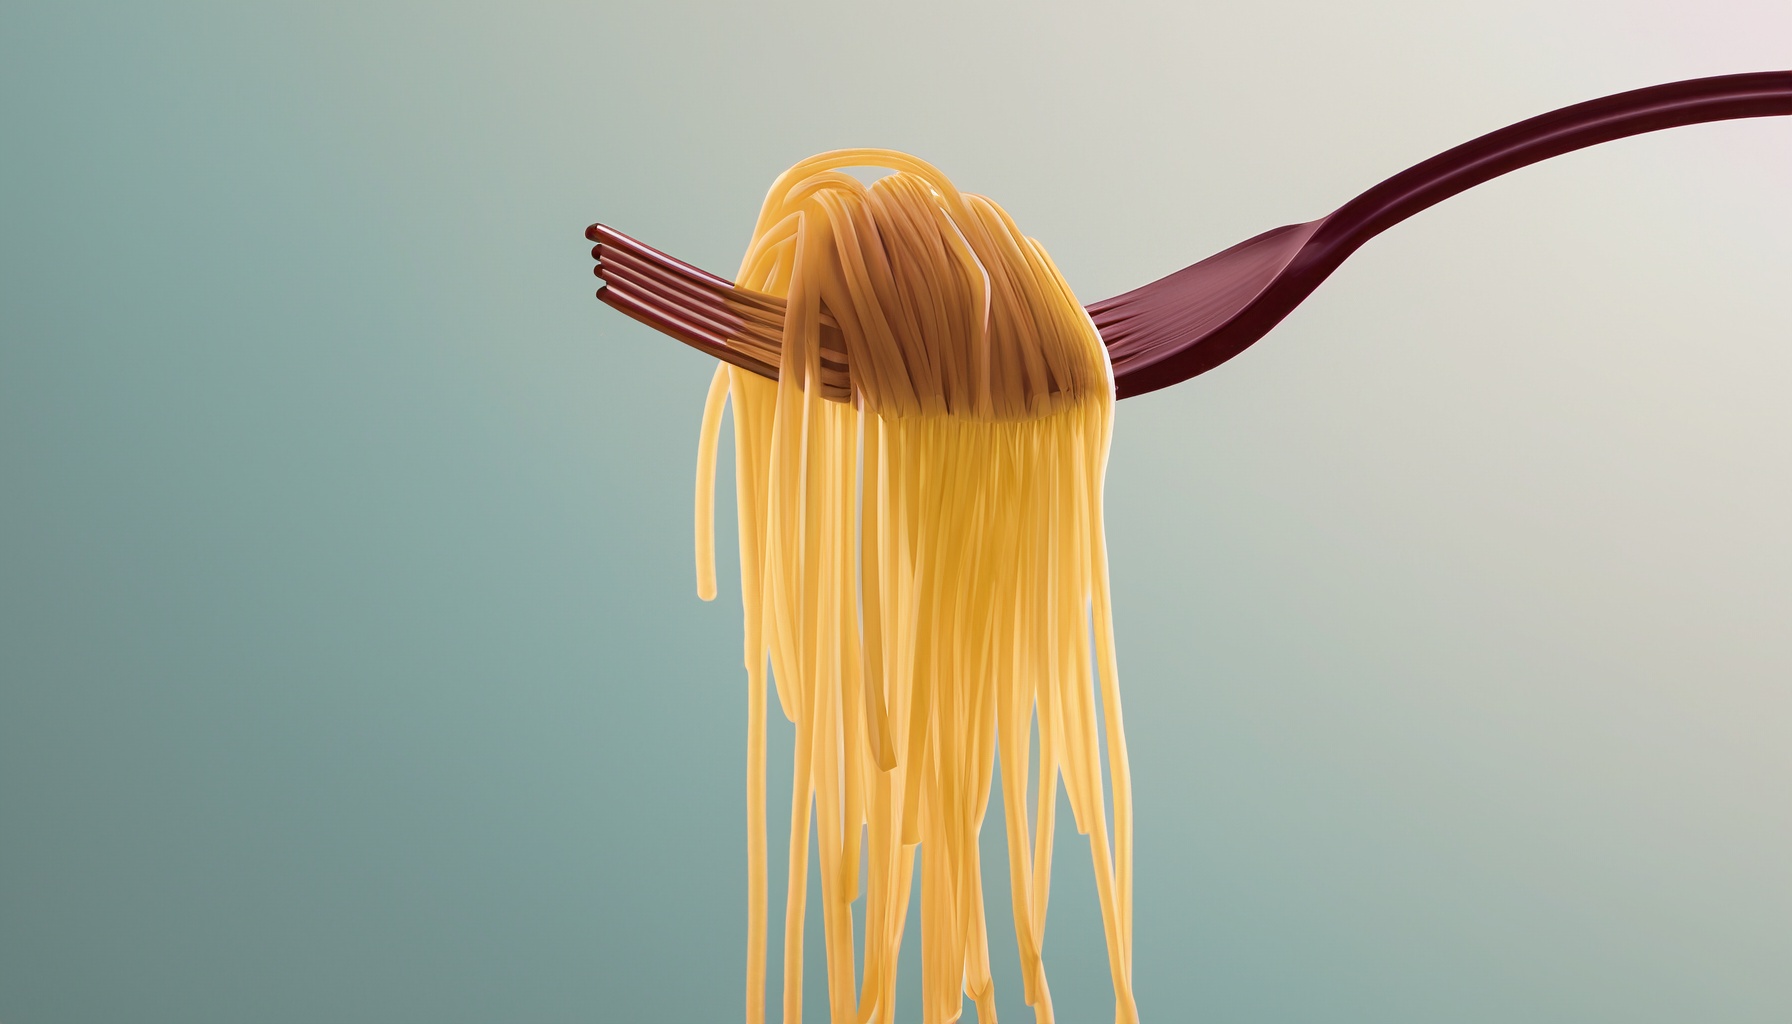 A single strand of spaghetti is called a ‘spaghetto’